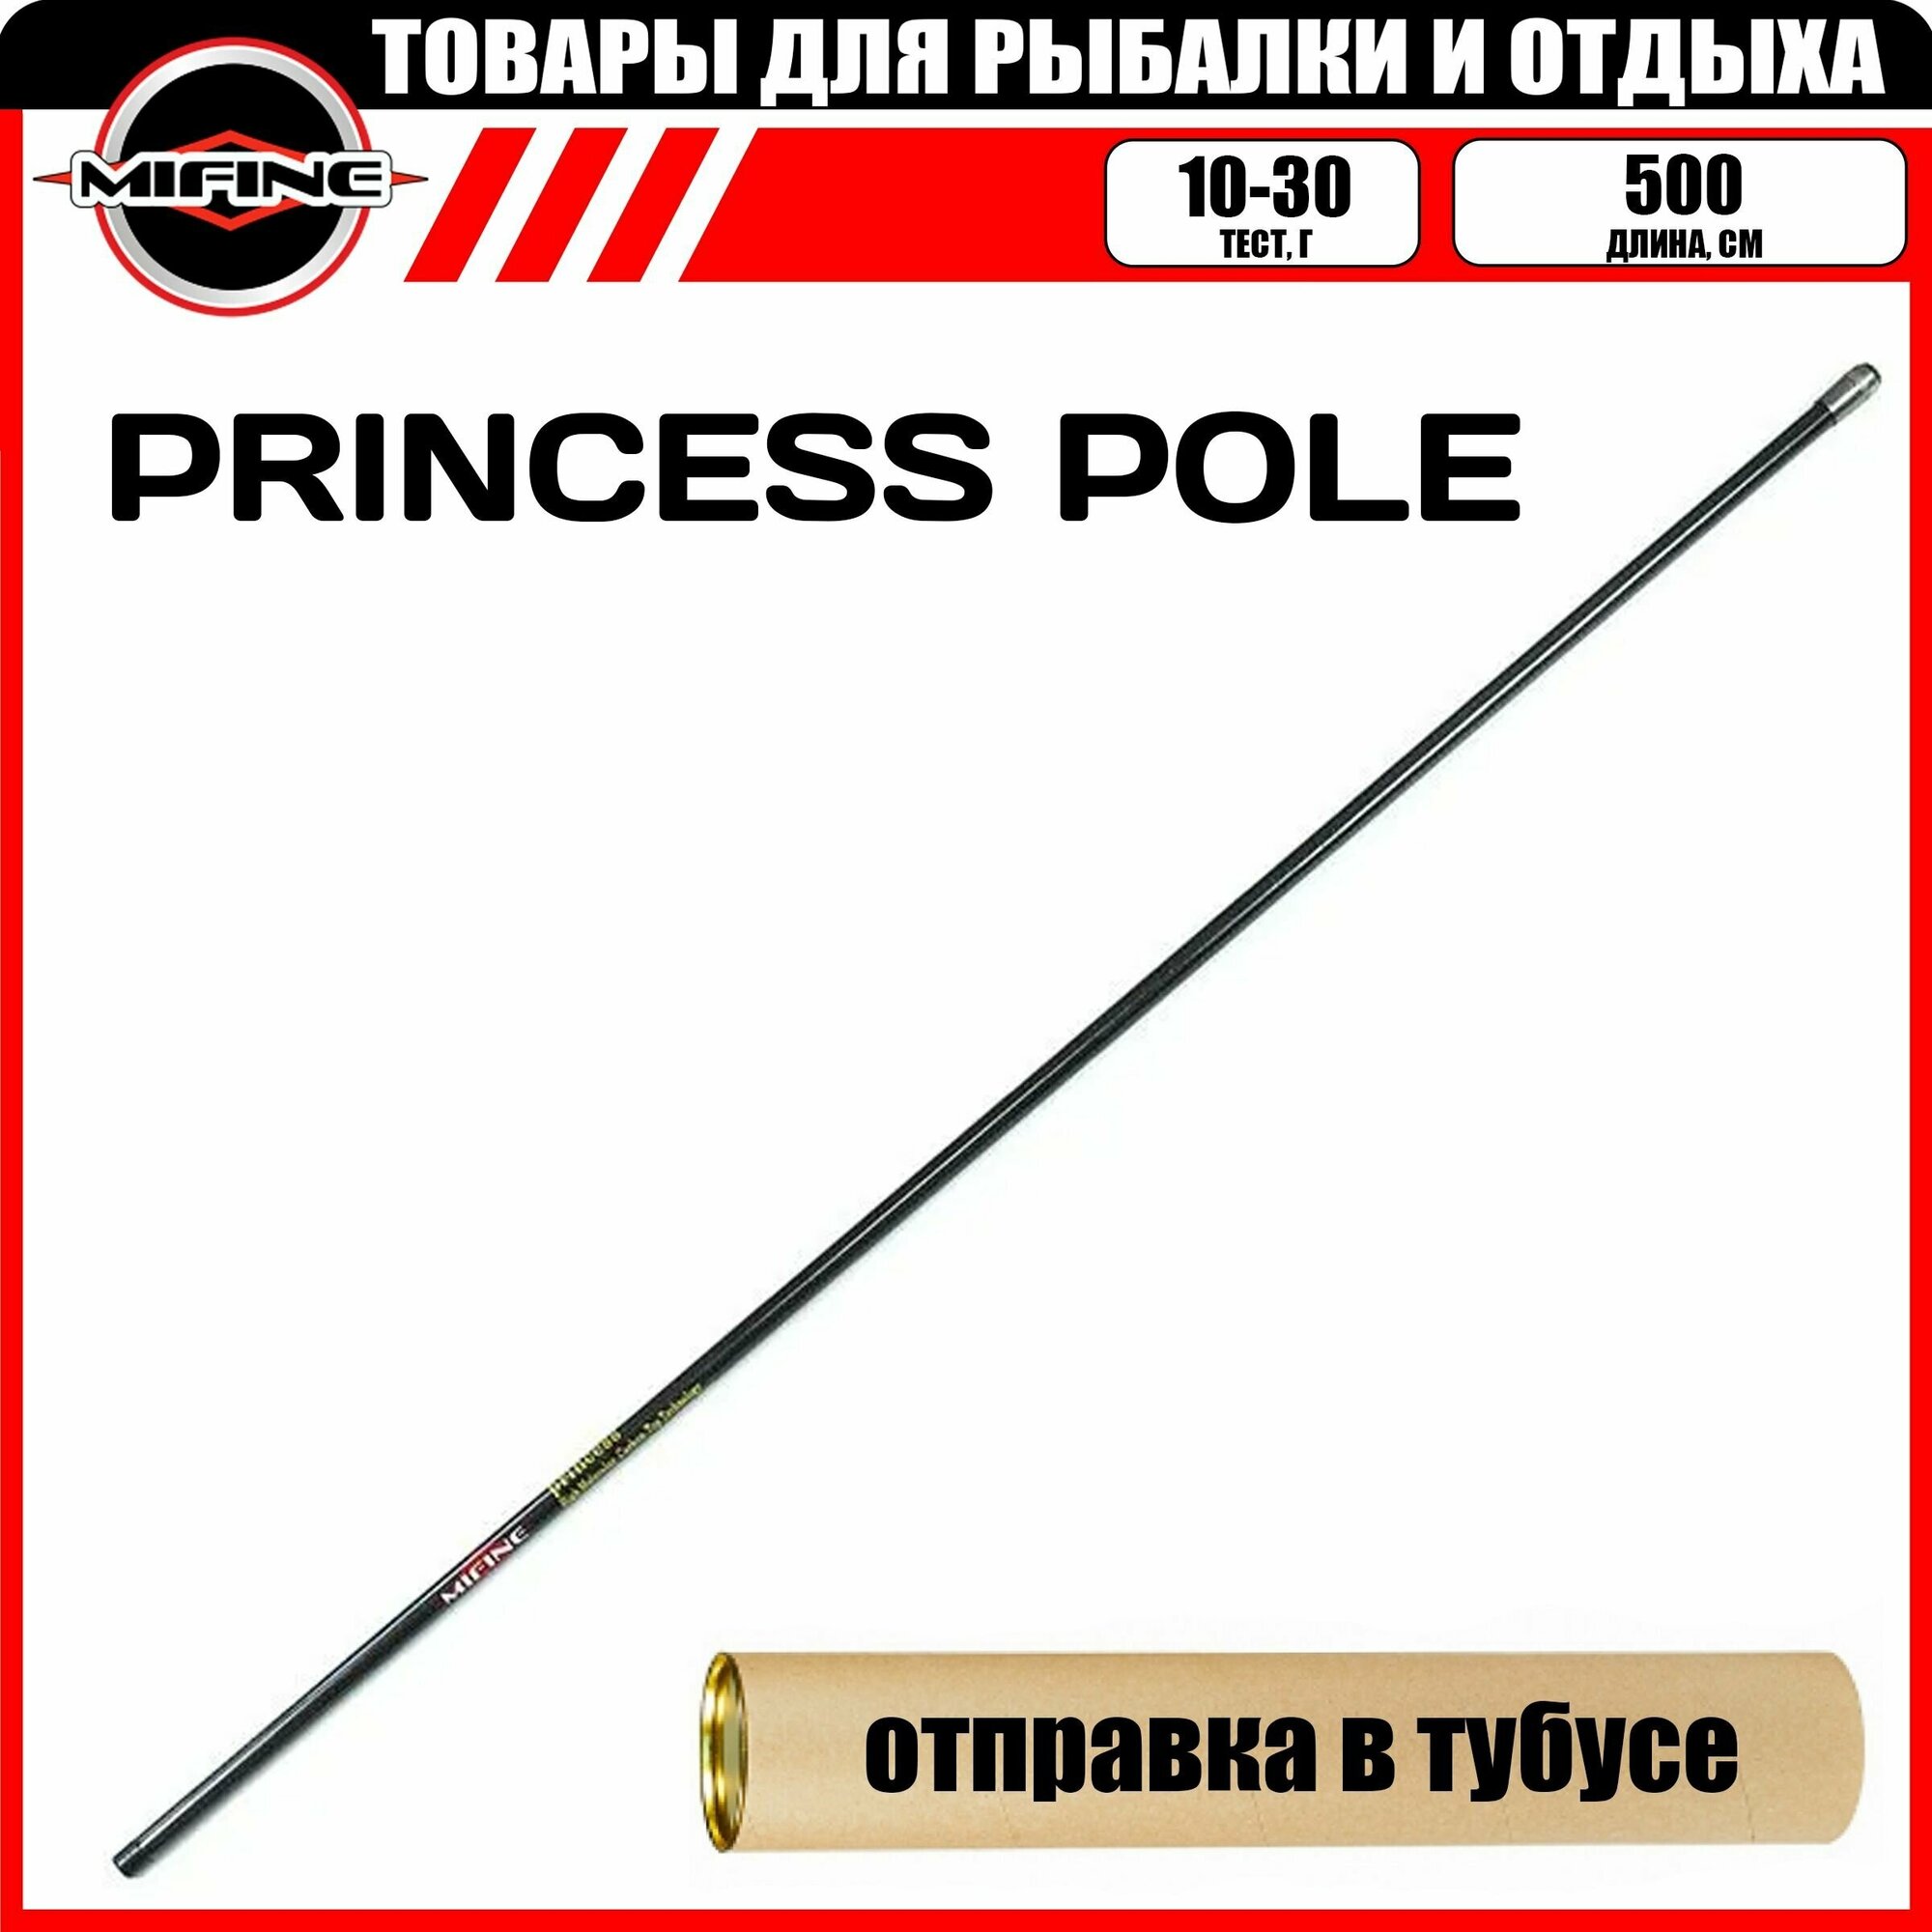 Удилище маховое Mifine Princess pole 500 5 метров